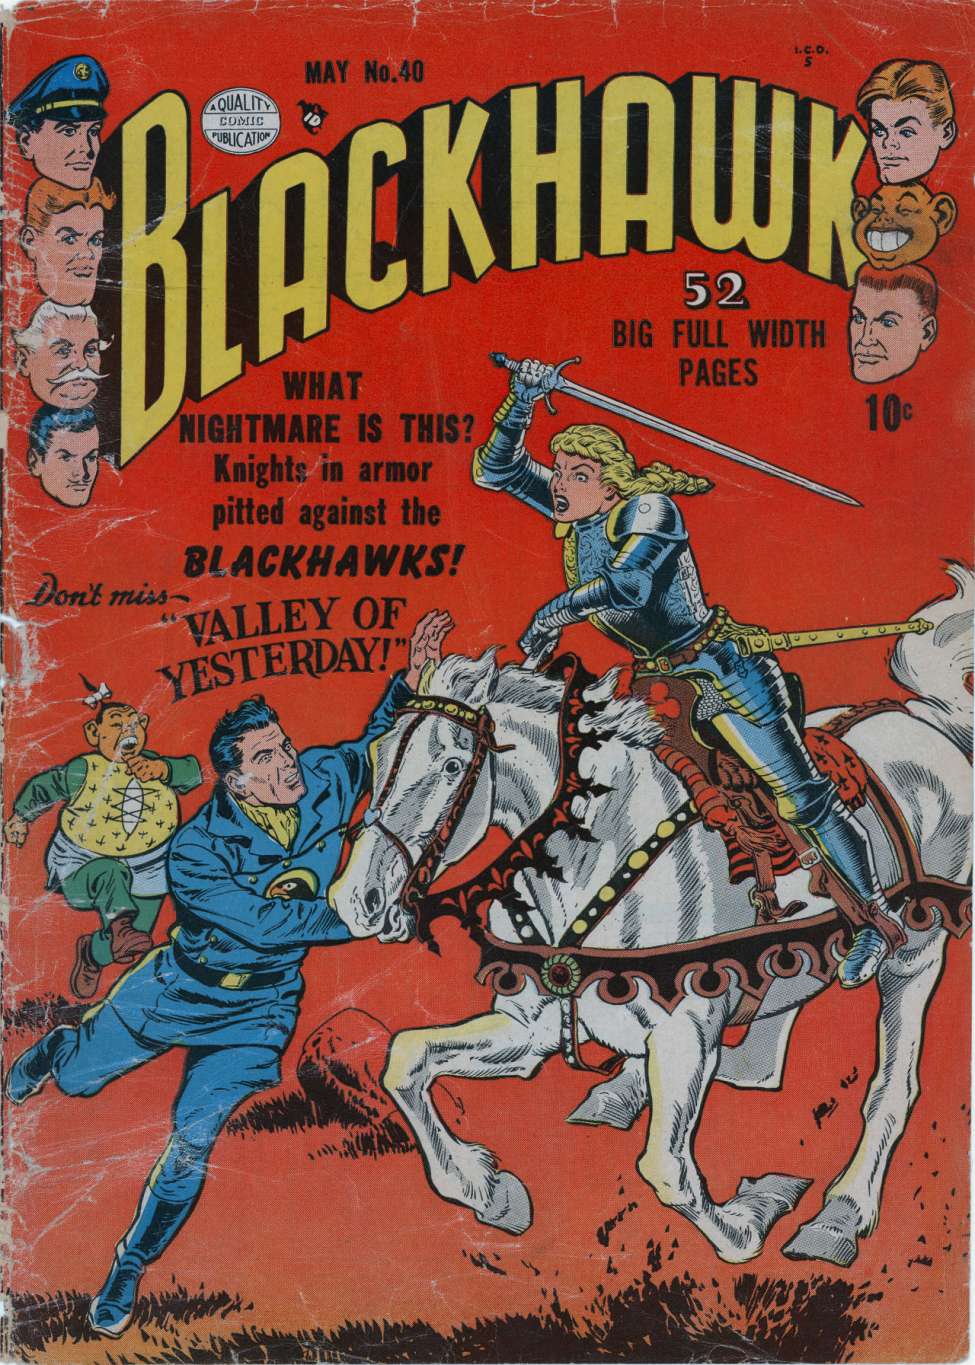 Book Cover For Blackhawk 40